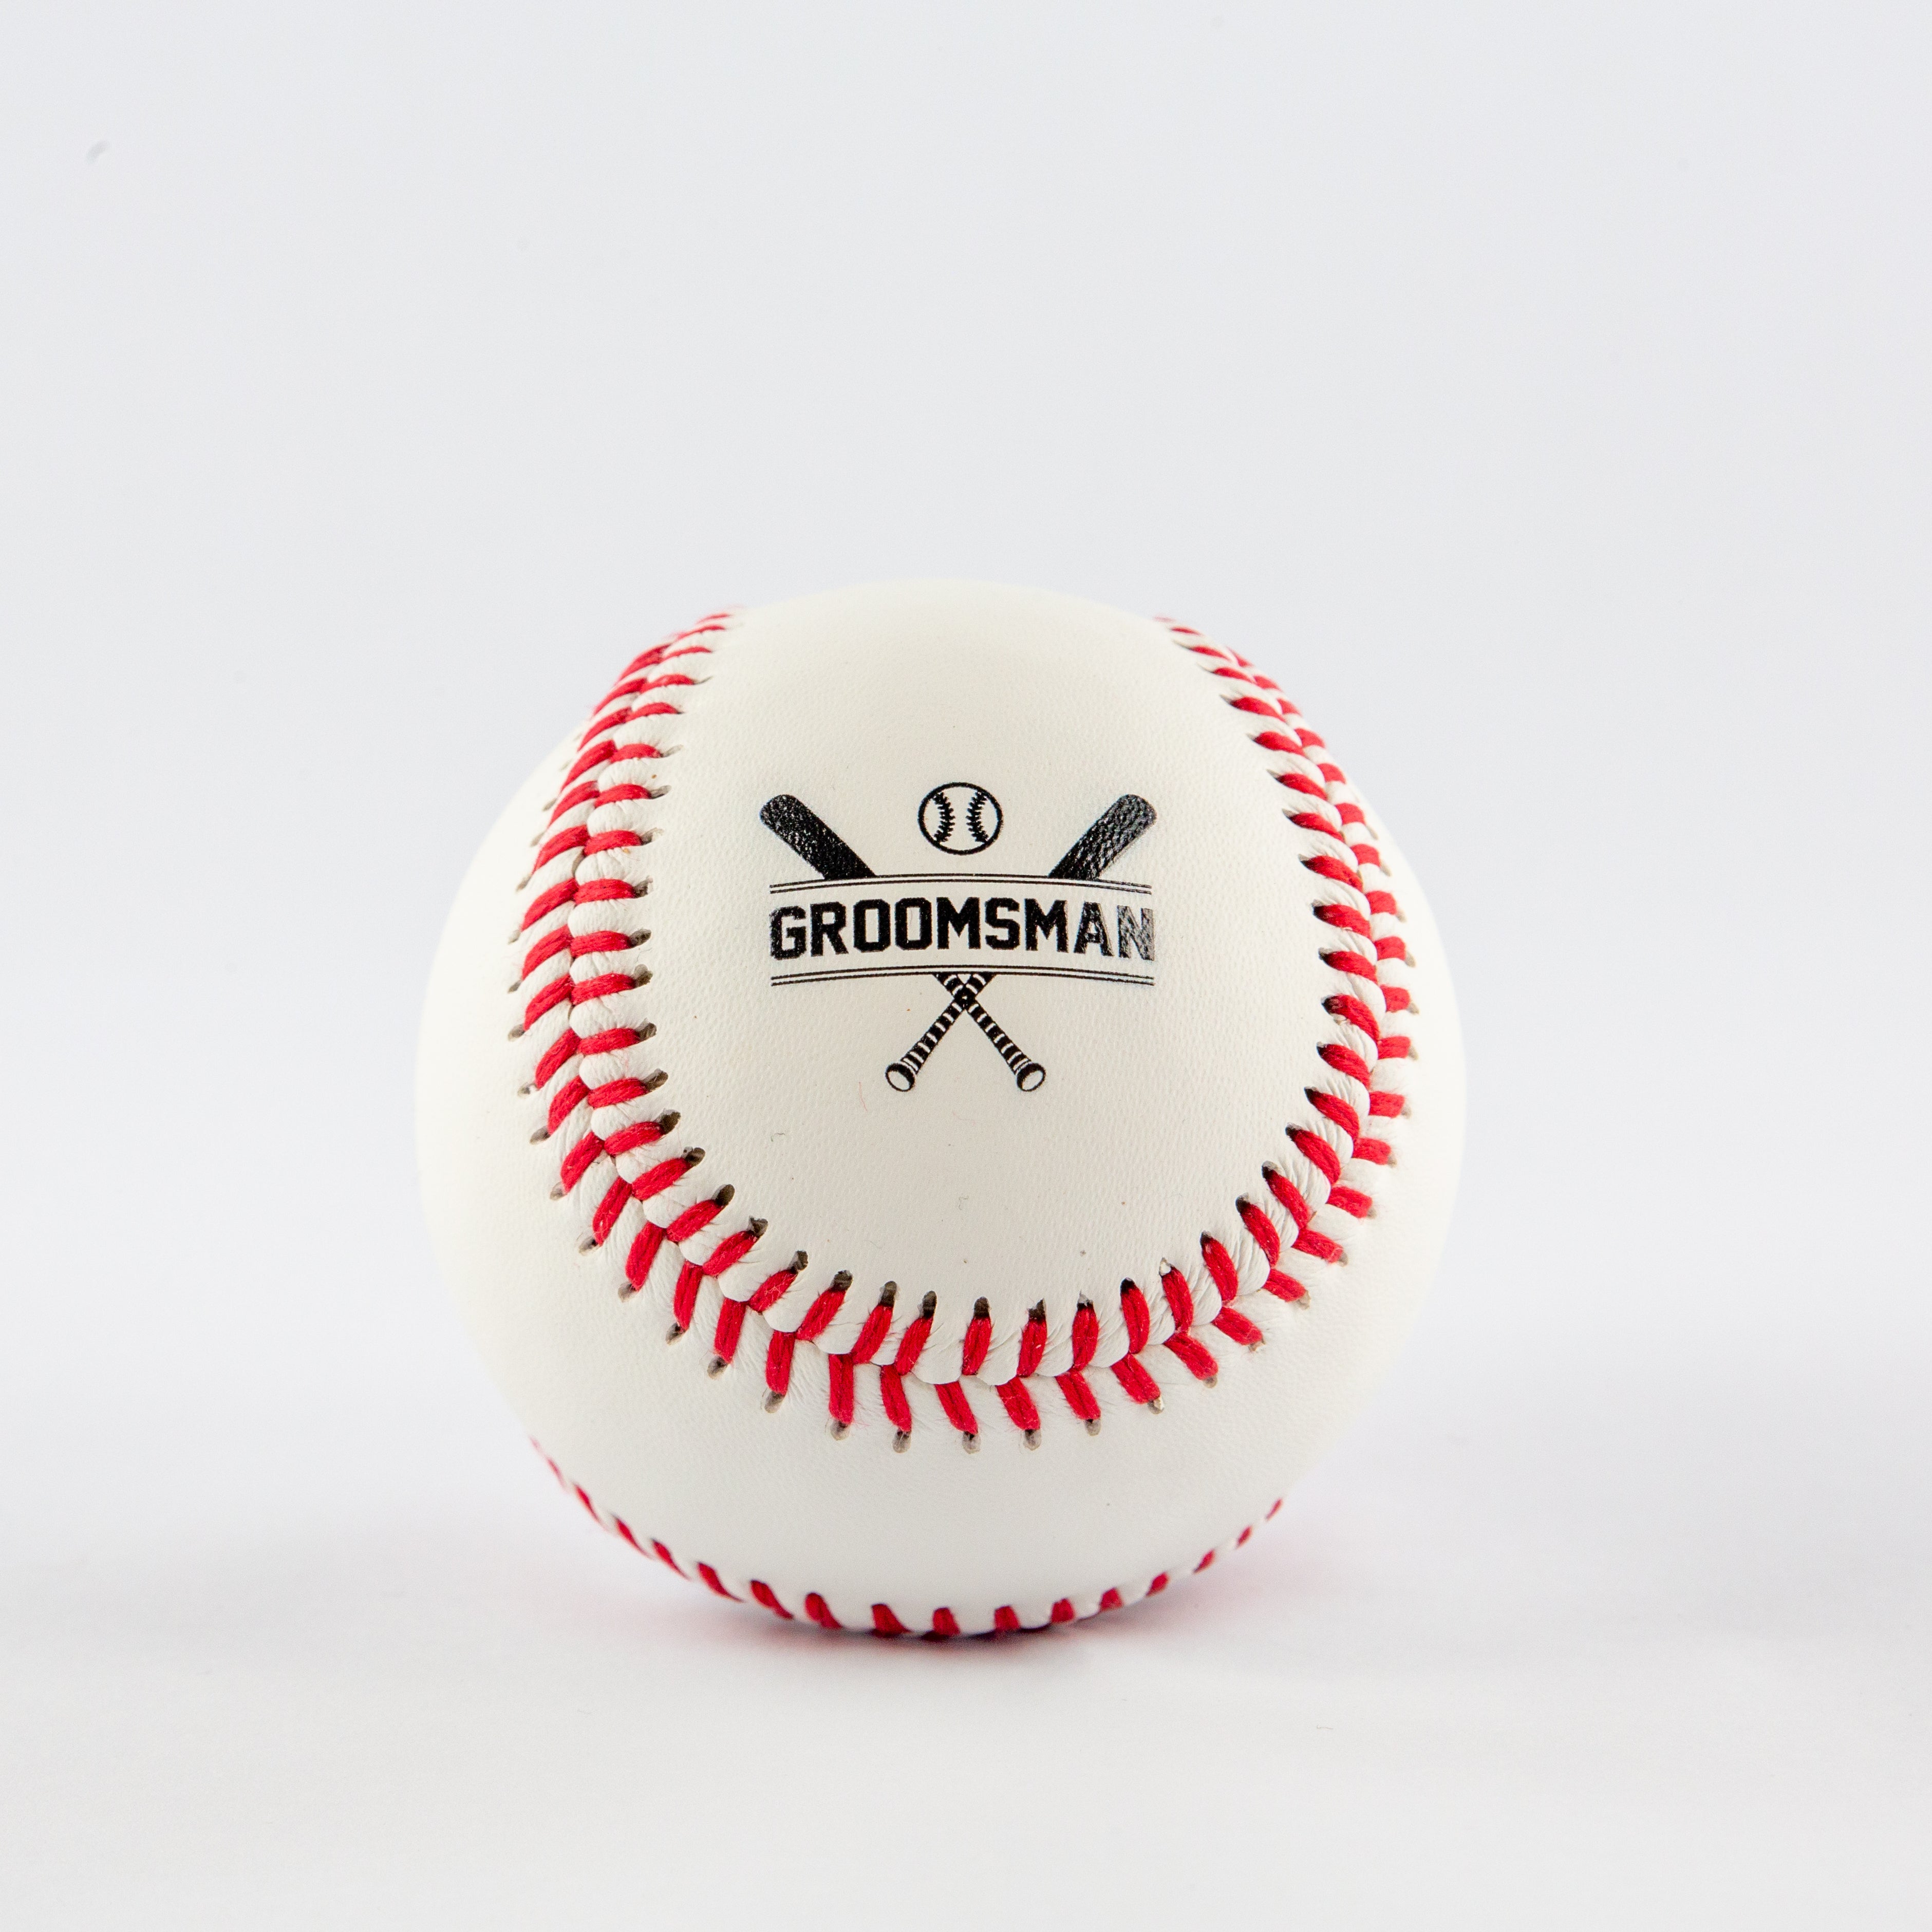 Printed Baseball with Groomsmen Design